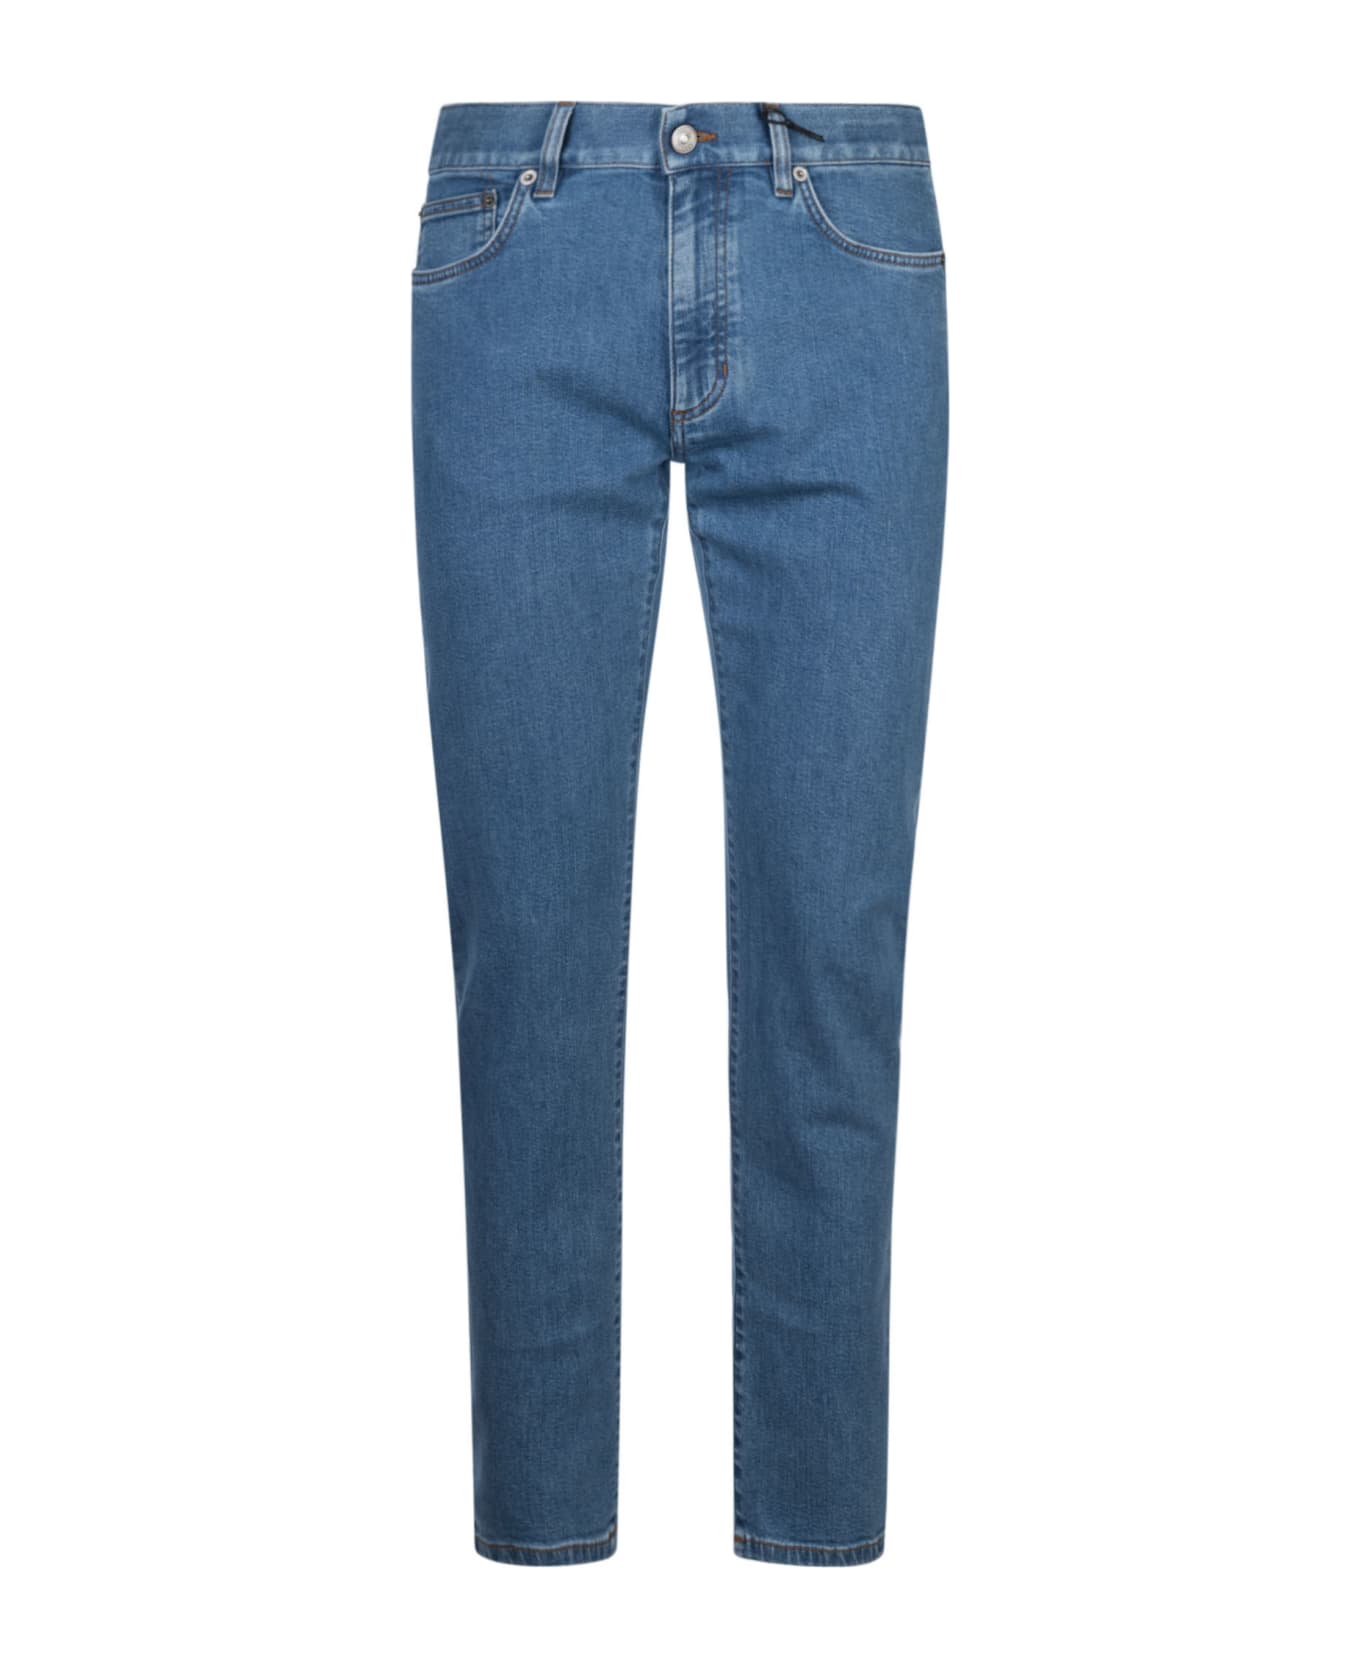 Zegna Classic 5 Pockets Jeans - Denim